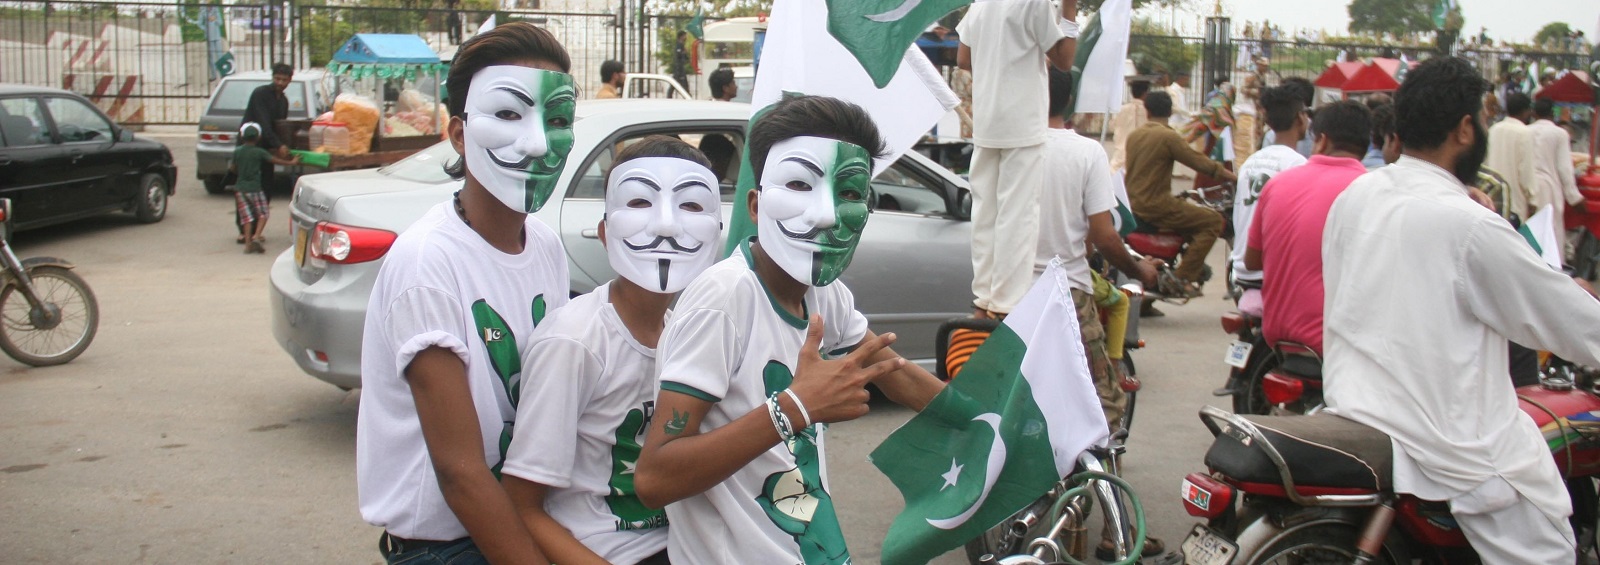 Pakistan Independence Day, Karachi, 14 August 2016 (Photo: Sabir Mazhar/Getty Images